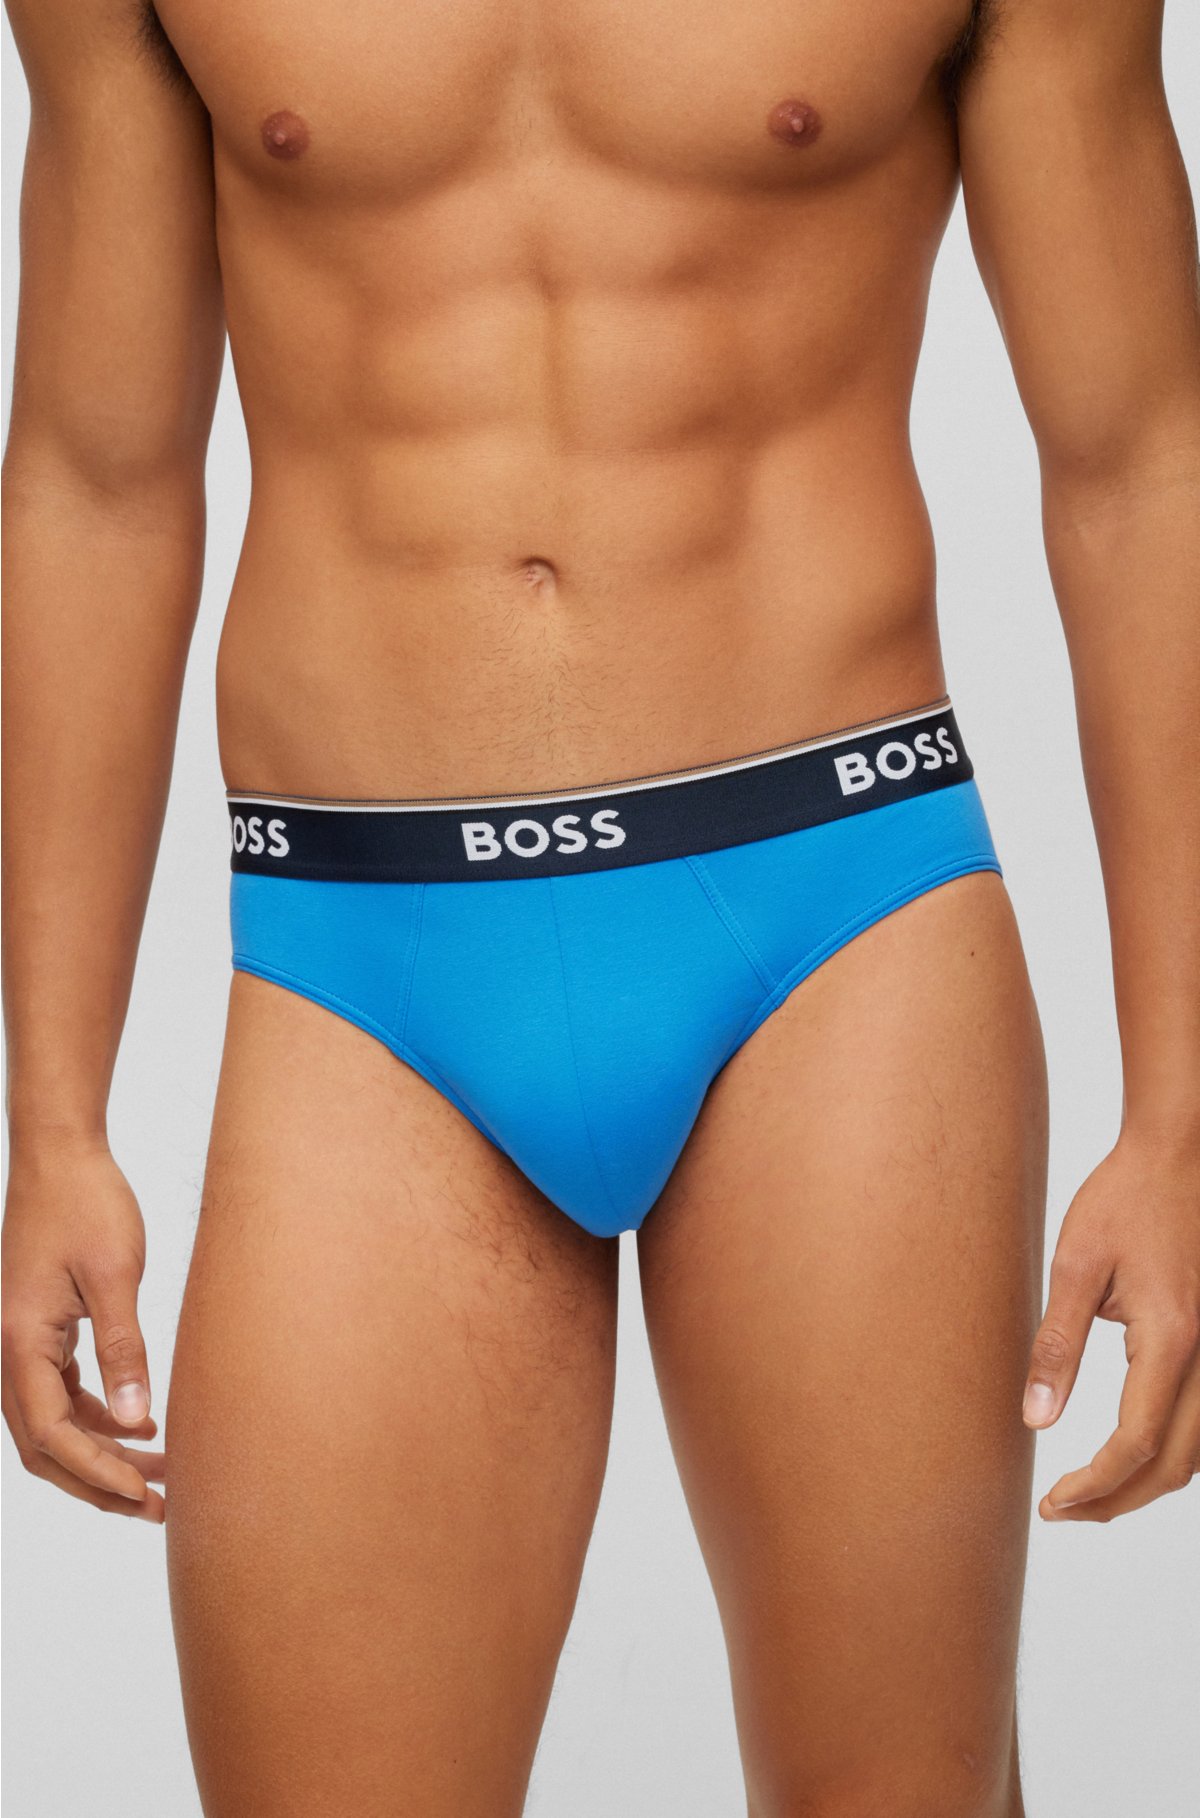 BOSS - Pakke med tre underbukser i bomuld med stræk linning med logo